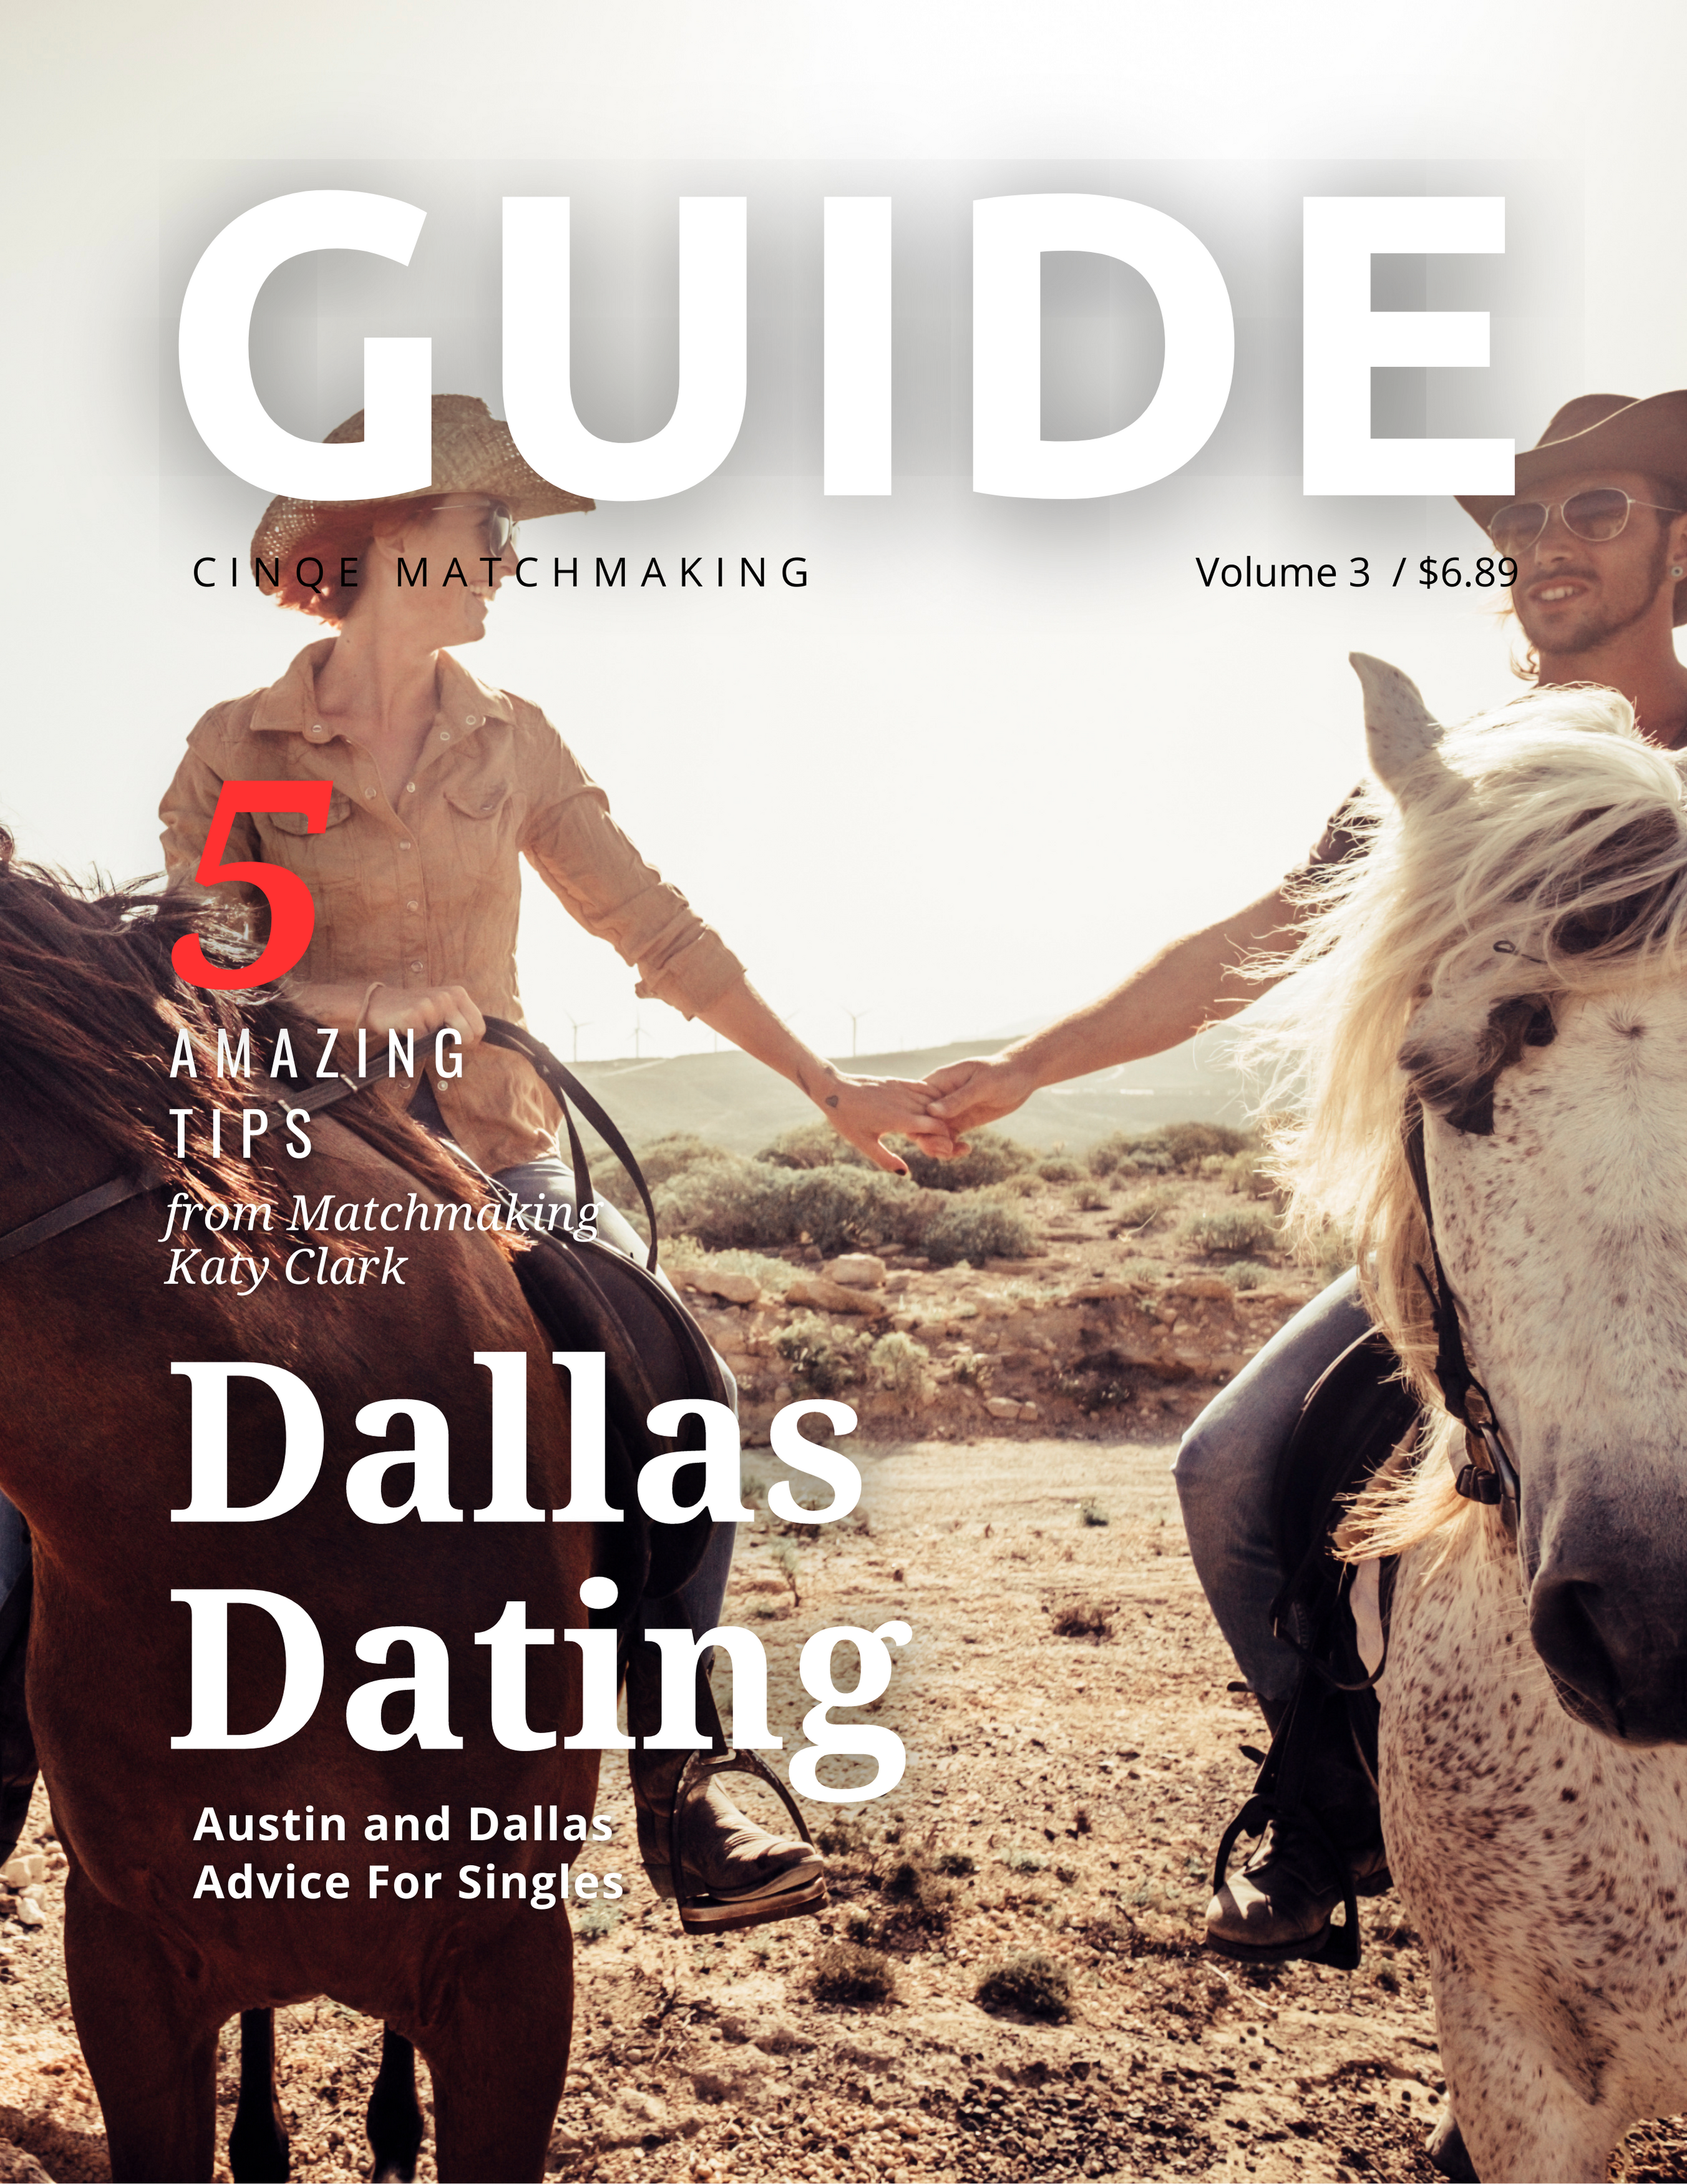 dallas texas matchmaking service magazine cover